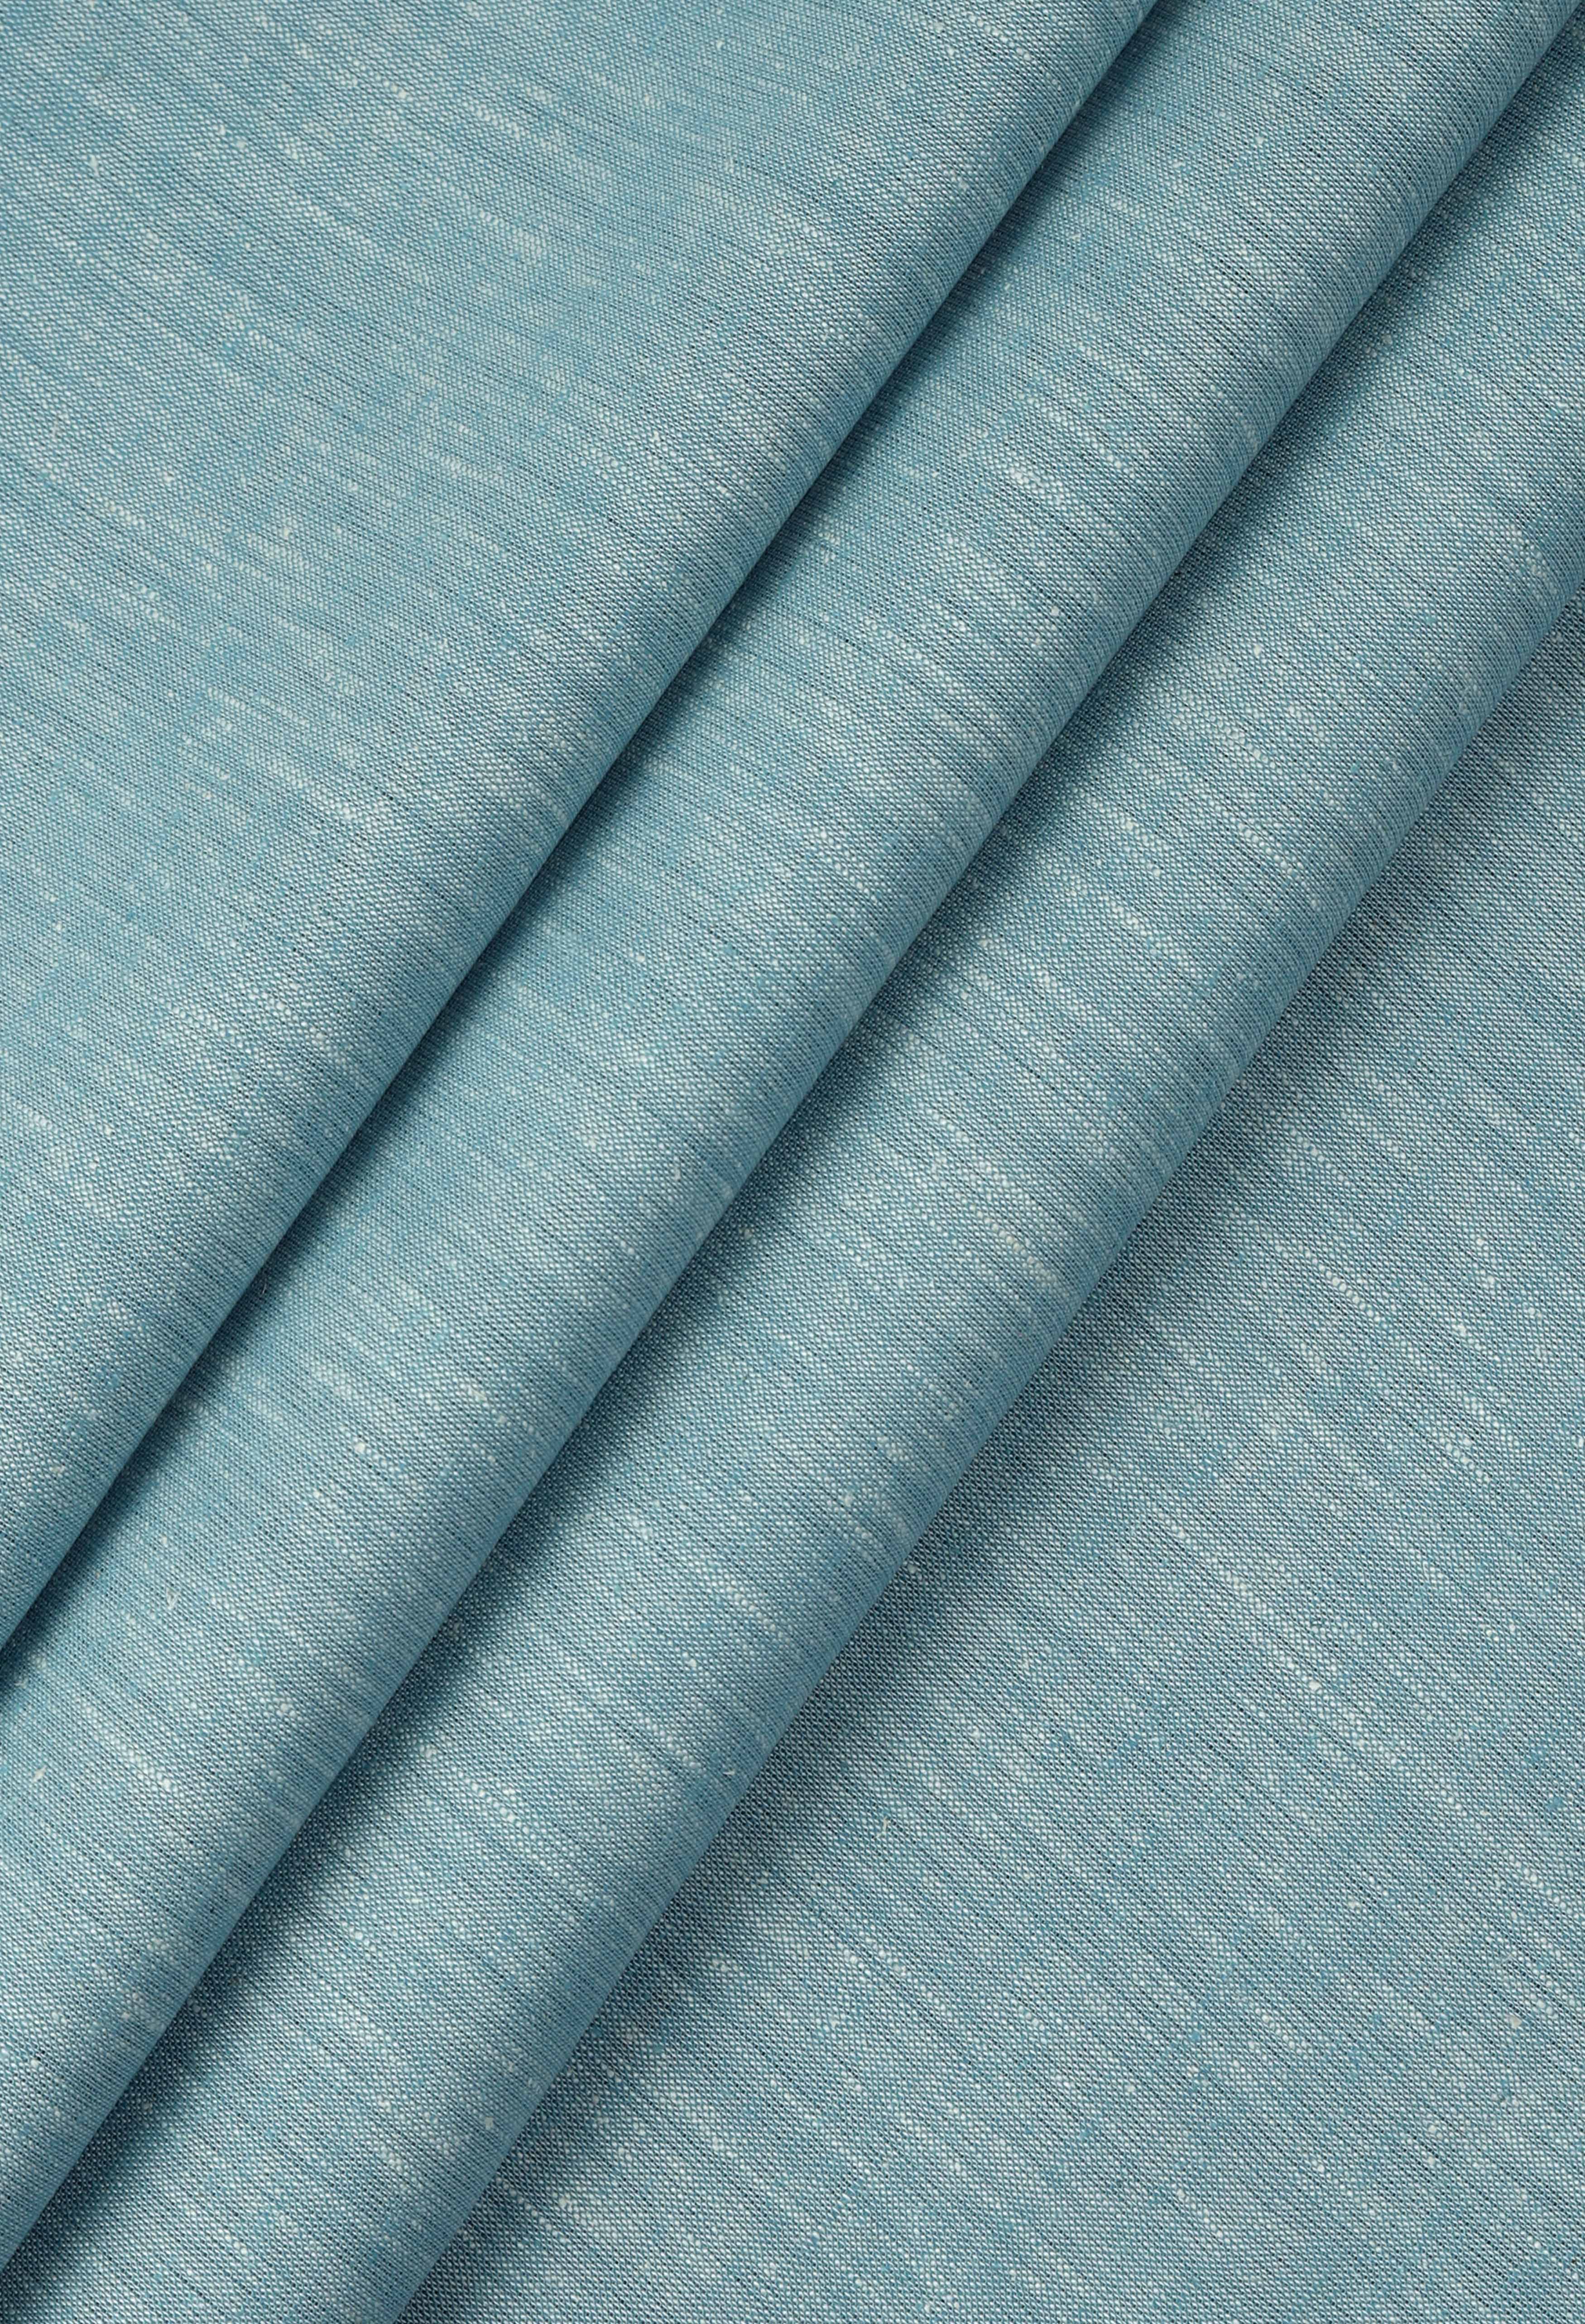 Ice Blue Linen (TH-000673)